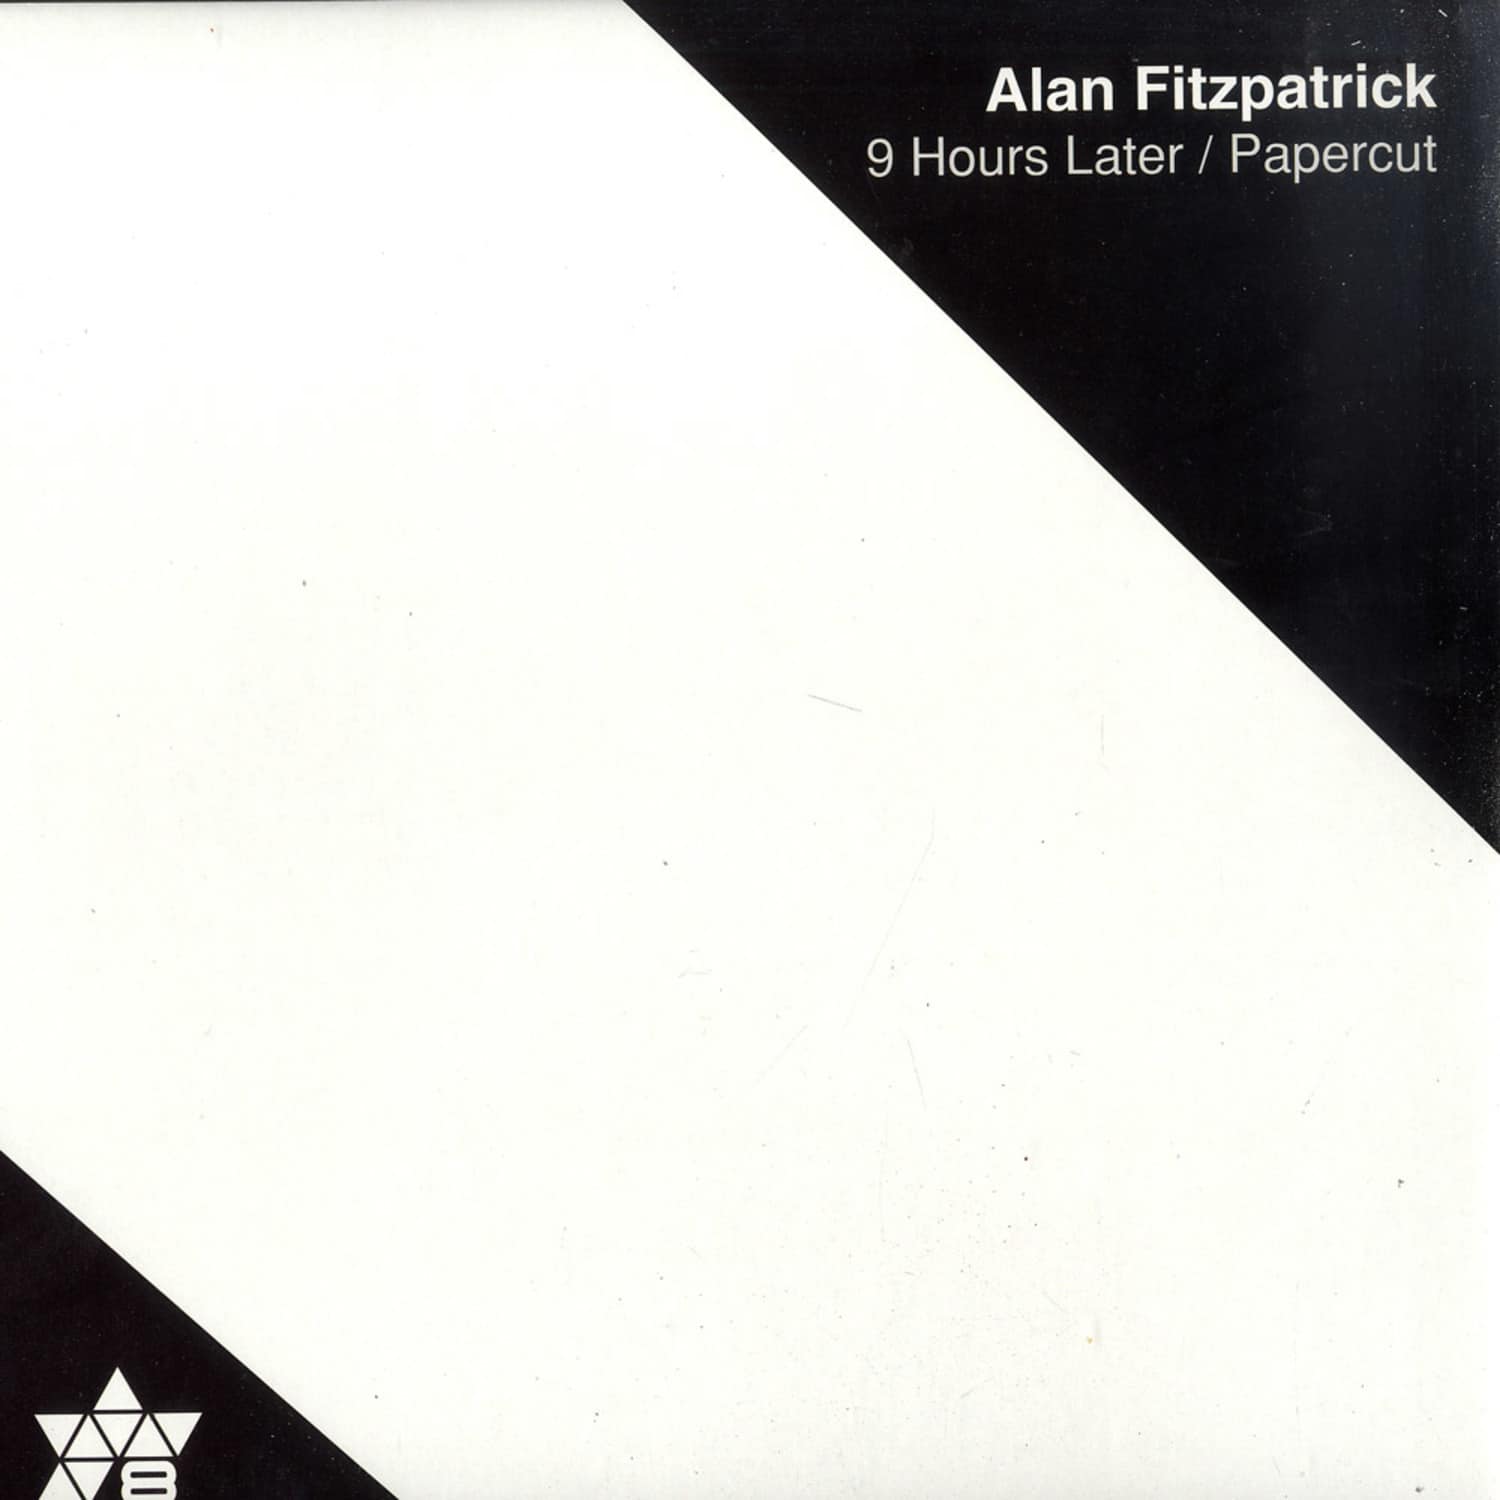 Alan Fitzpatrick - 9 HOURS LATER / PAPERCUT